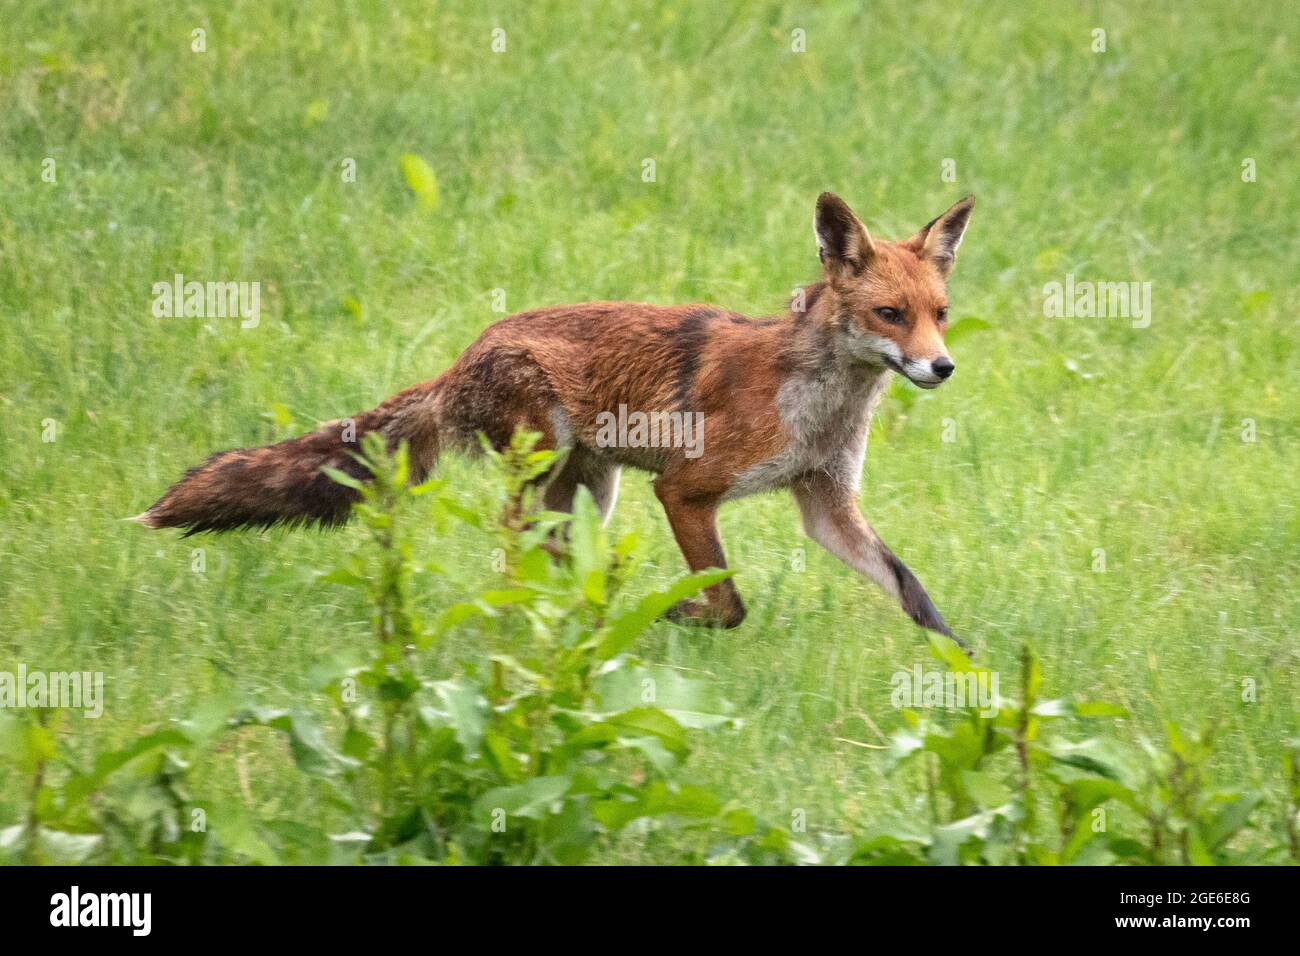 The Netherlands, Õs-Graveland, Rural estate Hilverbeek. Red fox. Stock Photo